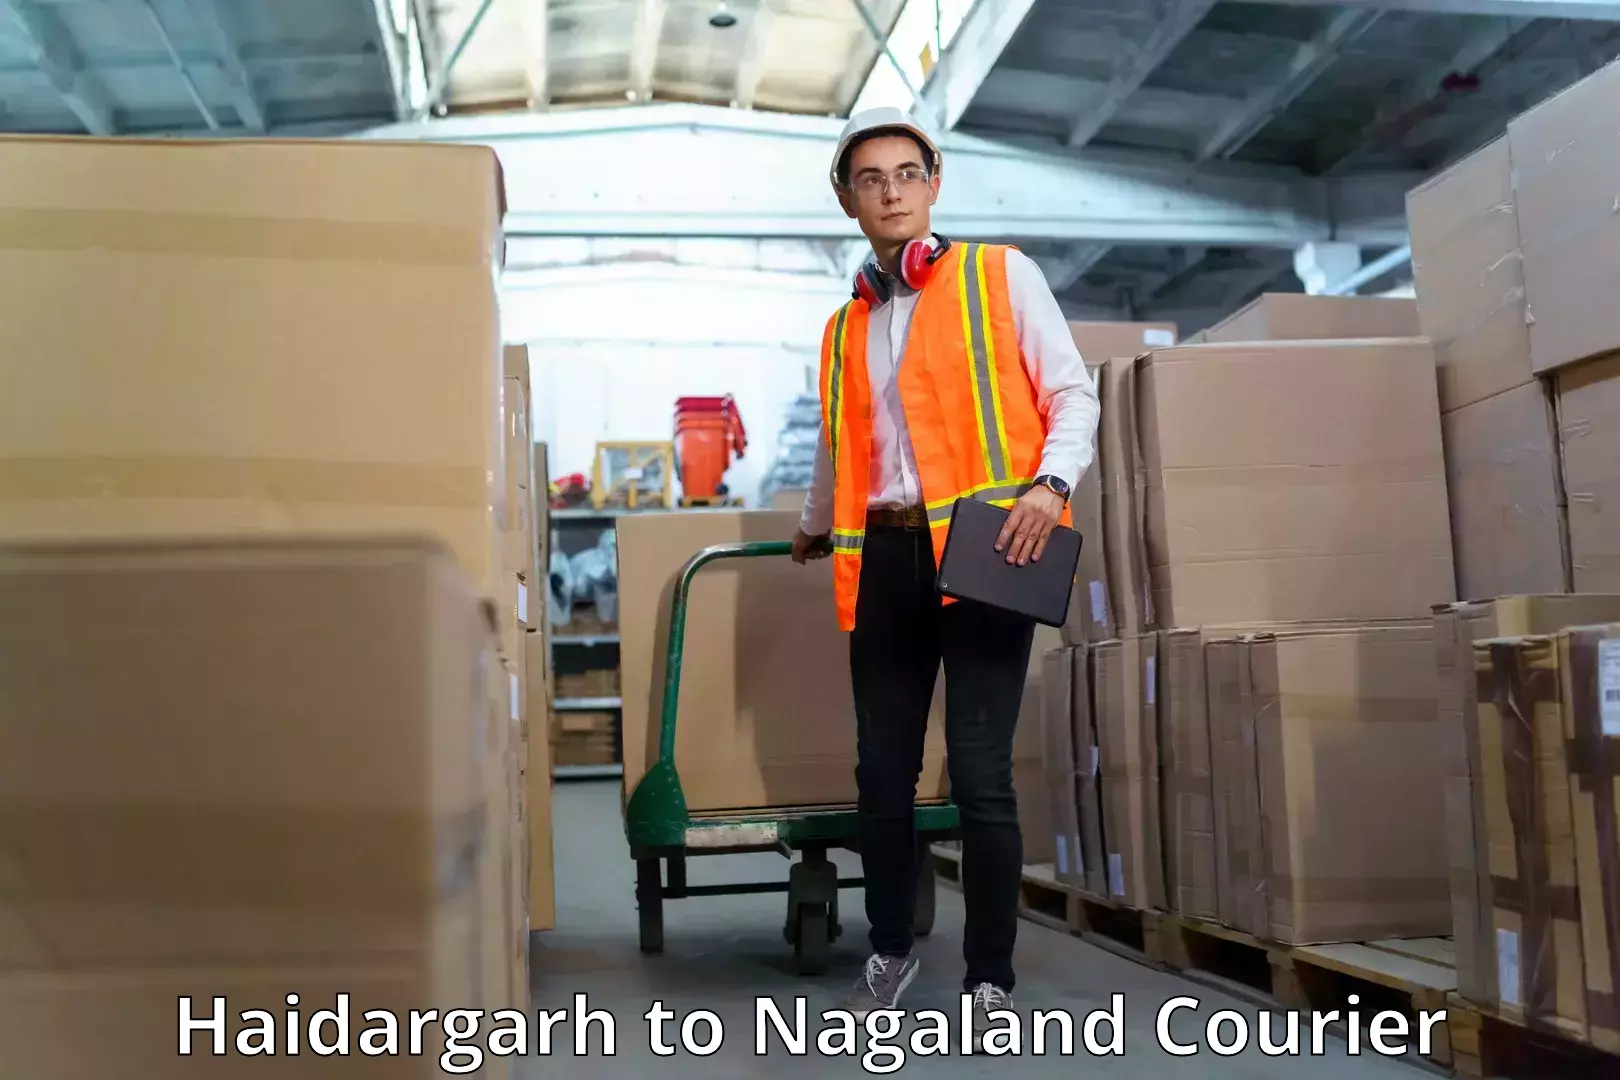 Advanced tracking systems Haidargarh to Nagaland